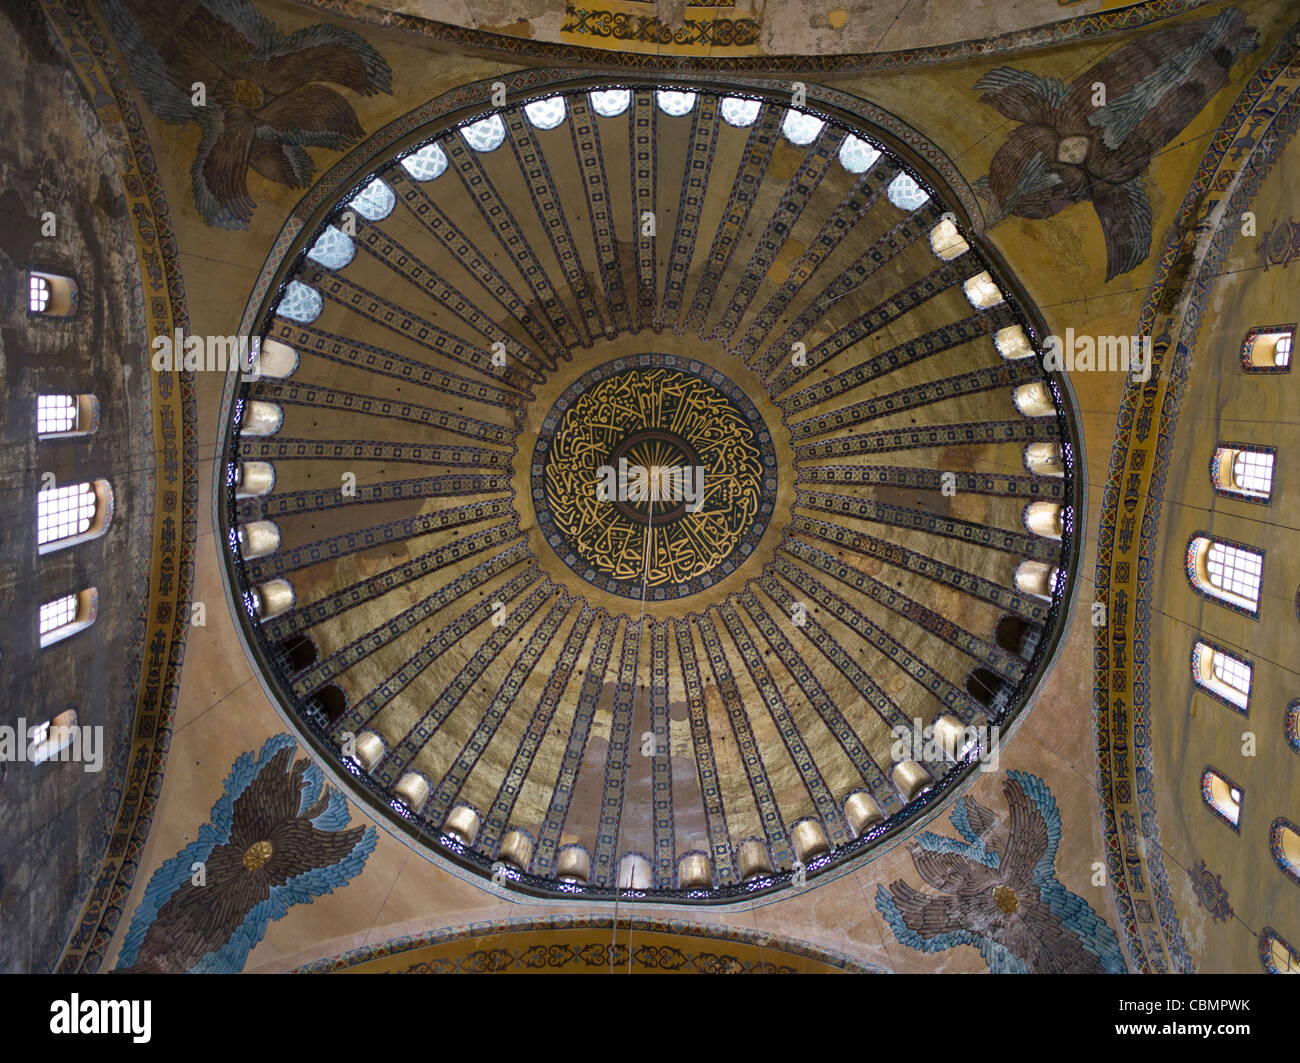 Dome of Hagia Sophia Interior ISTANBUL Stock Photo - Alamy